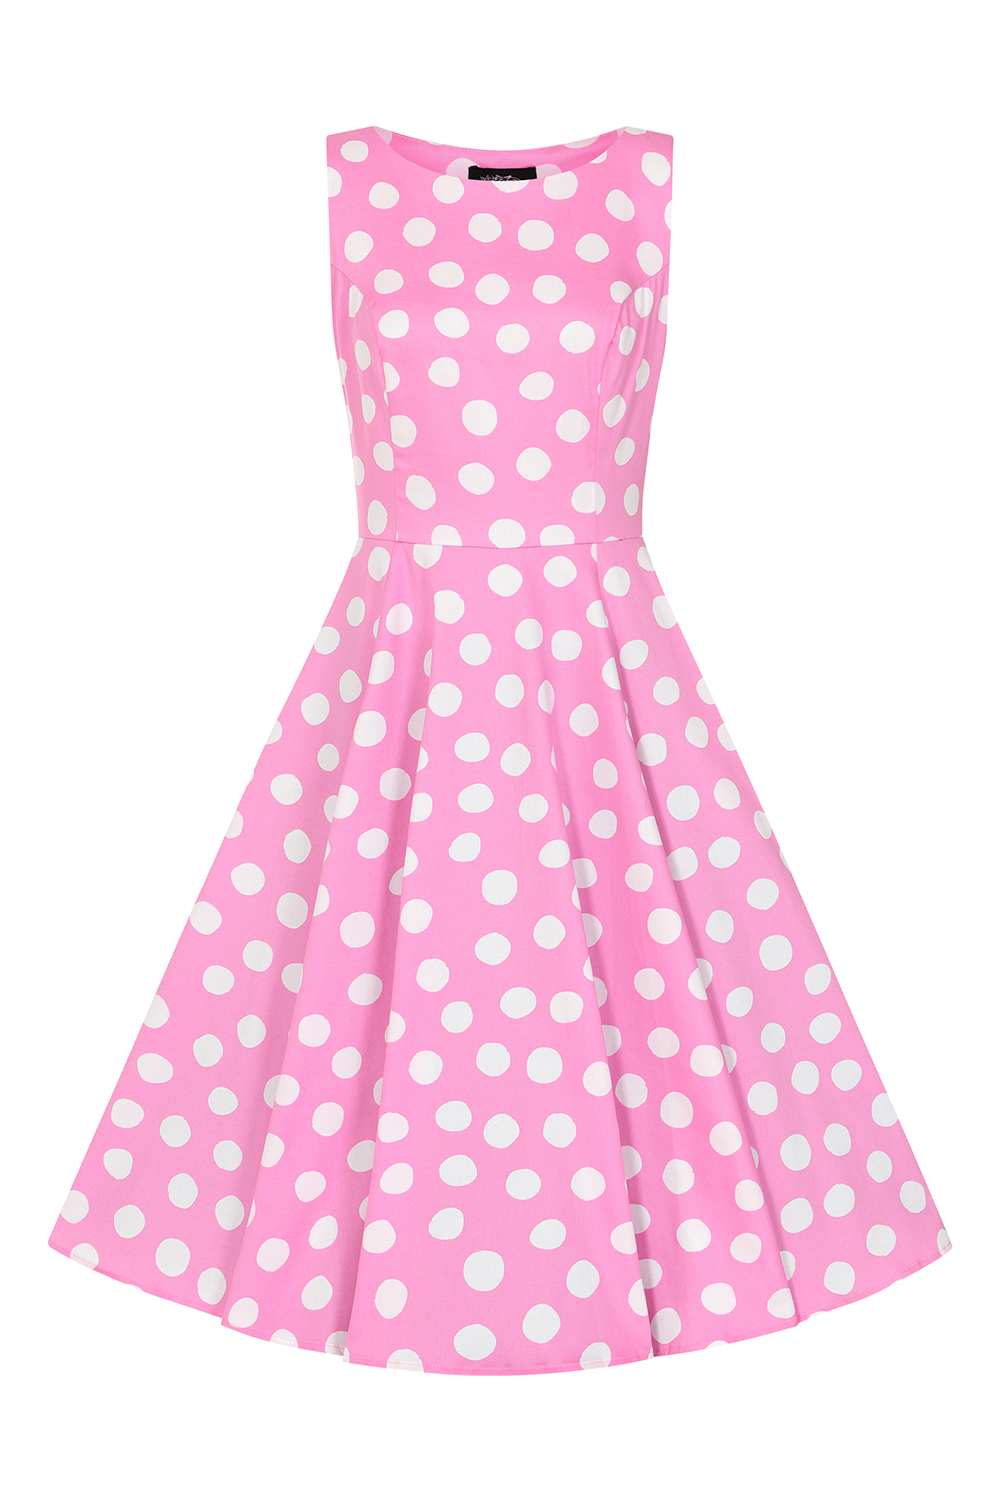 Lyra Polka Dot Swing Dress